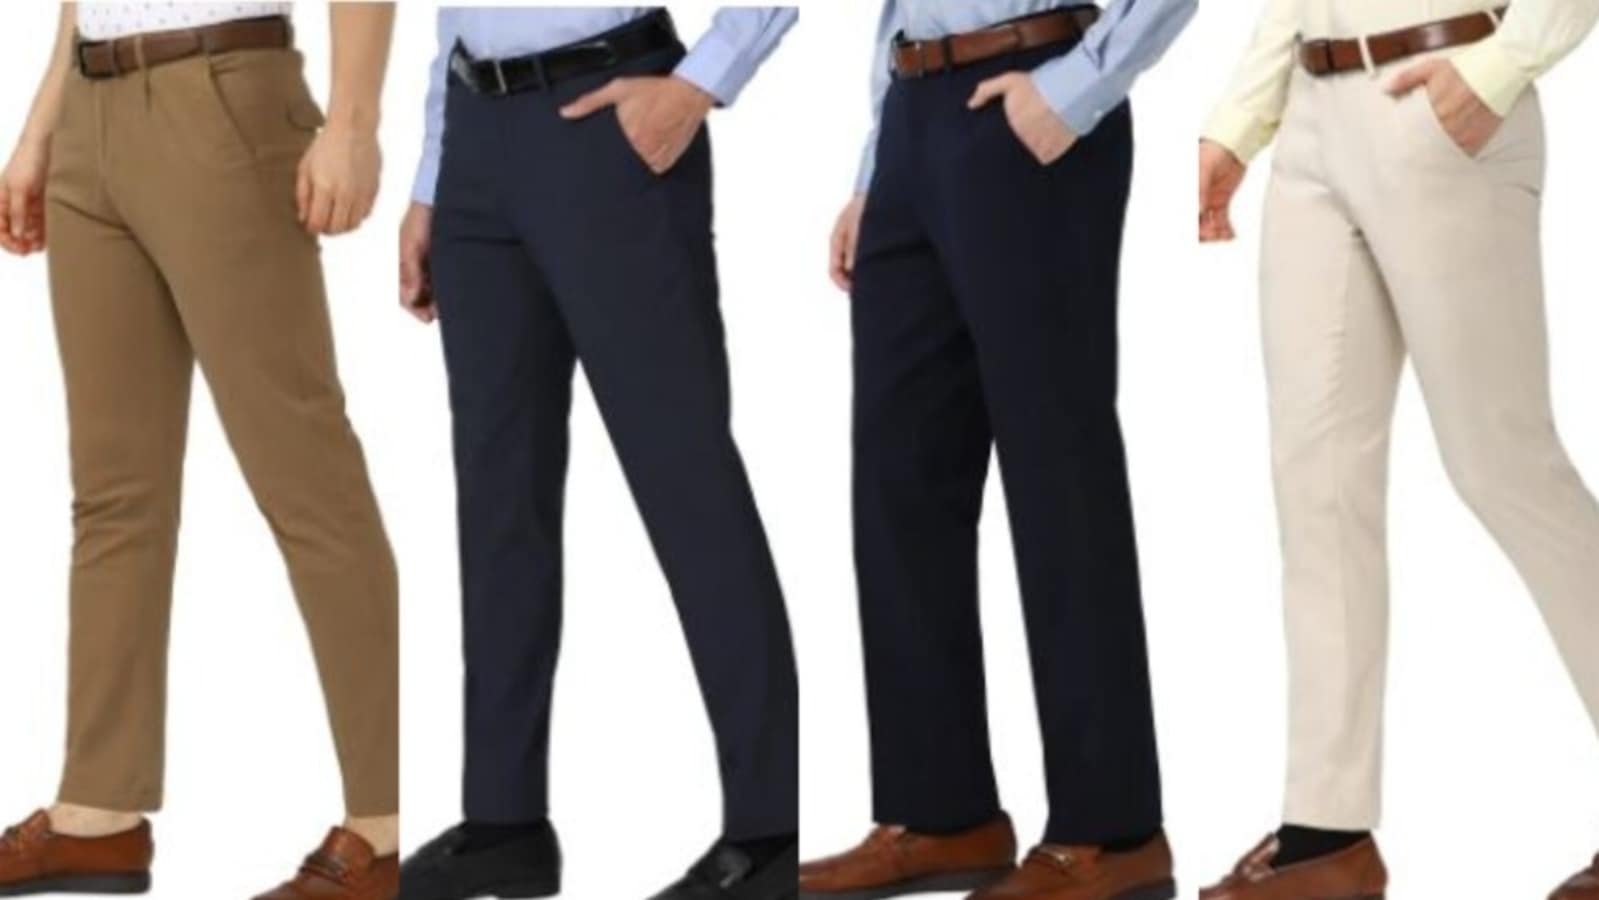 PETER ENGLAND Slim Fit Men Black Trousers - Buy PETER ENGLAND Slim Fit Men  Black Trousers Online at Best Prices in India | Flipkart.com